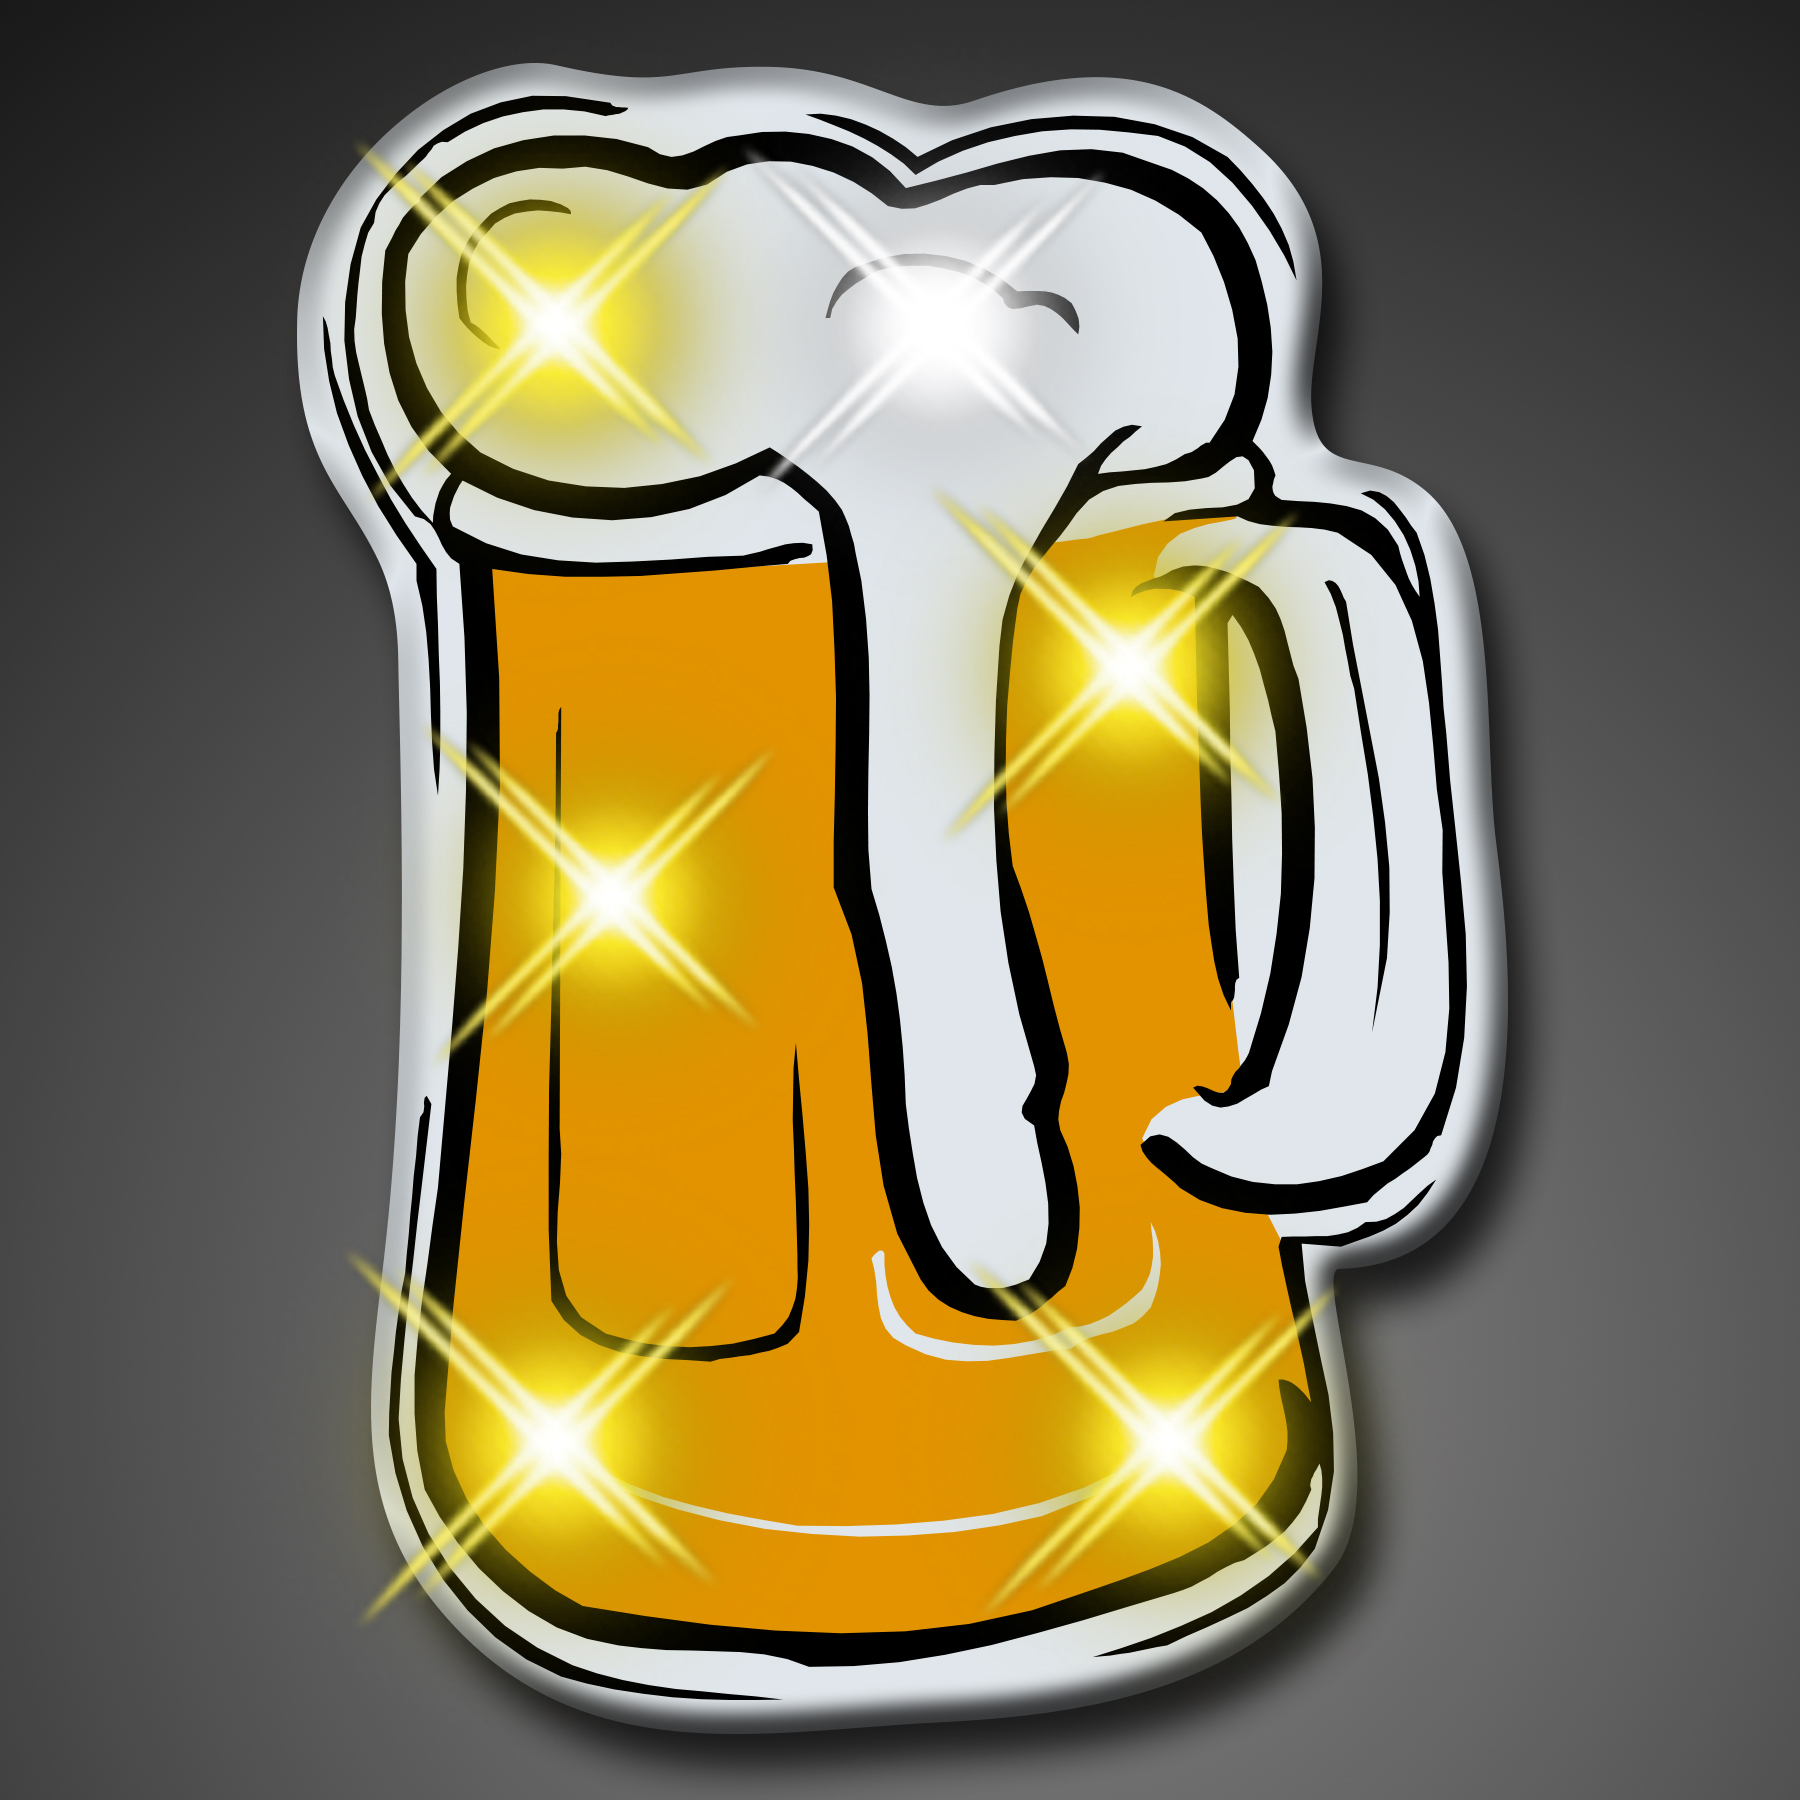 FlashingBlinkyLights Beer Mug Flashing Blinking Light Up Body Lights Pins - image 1 of 1